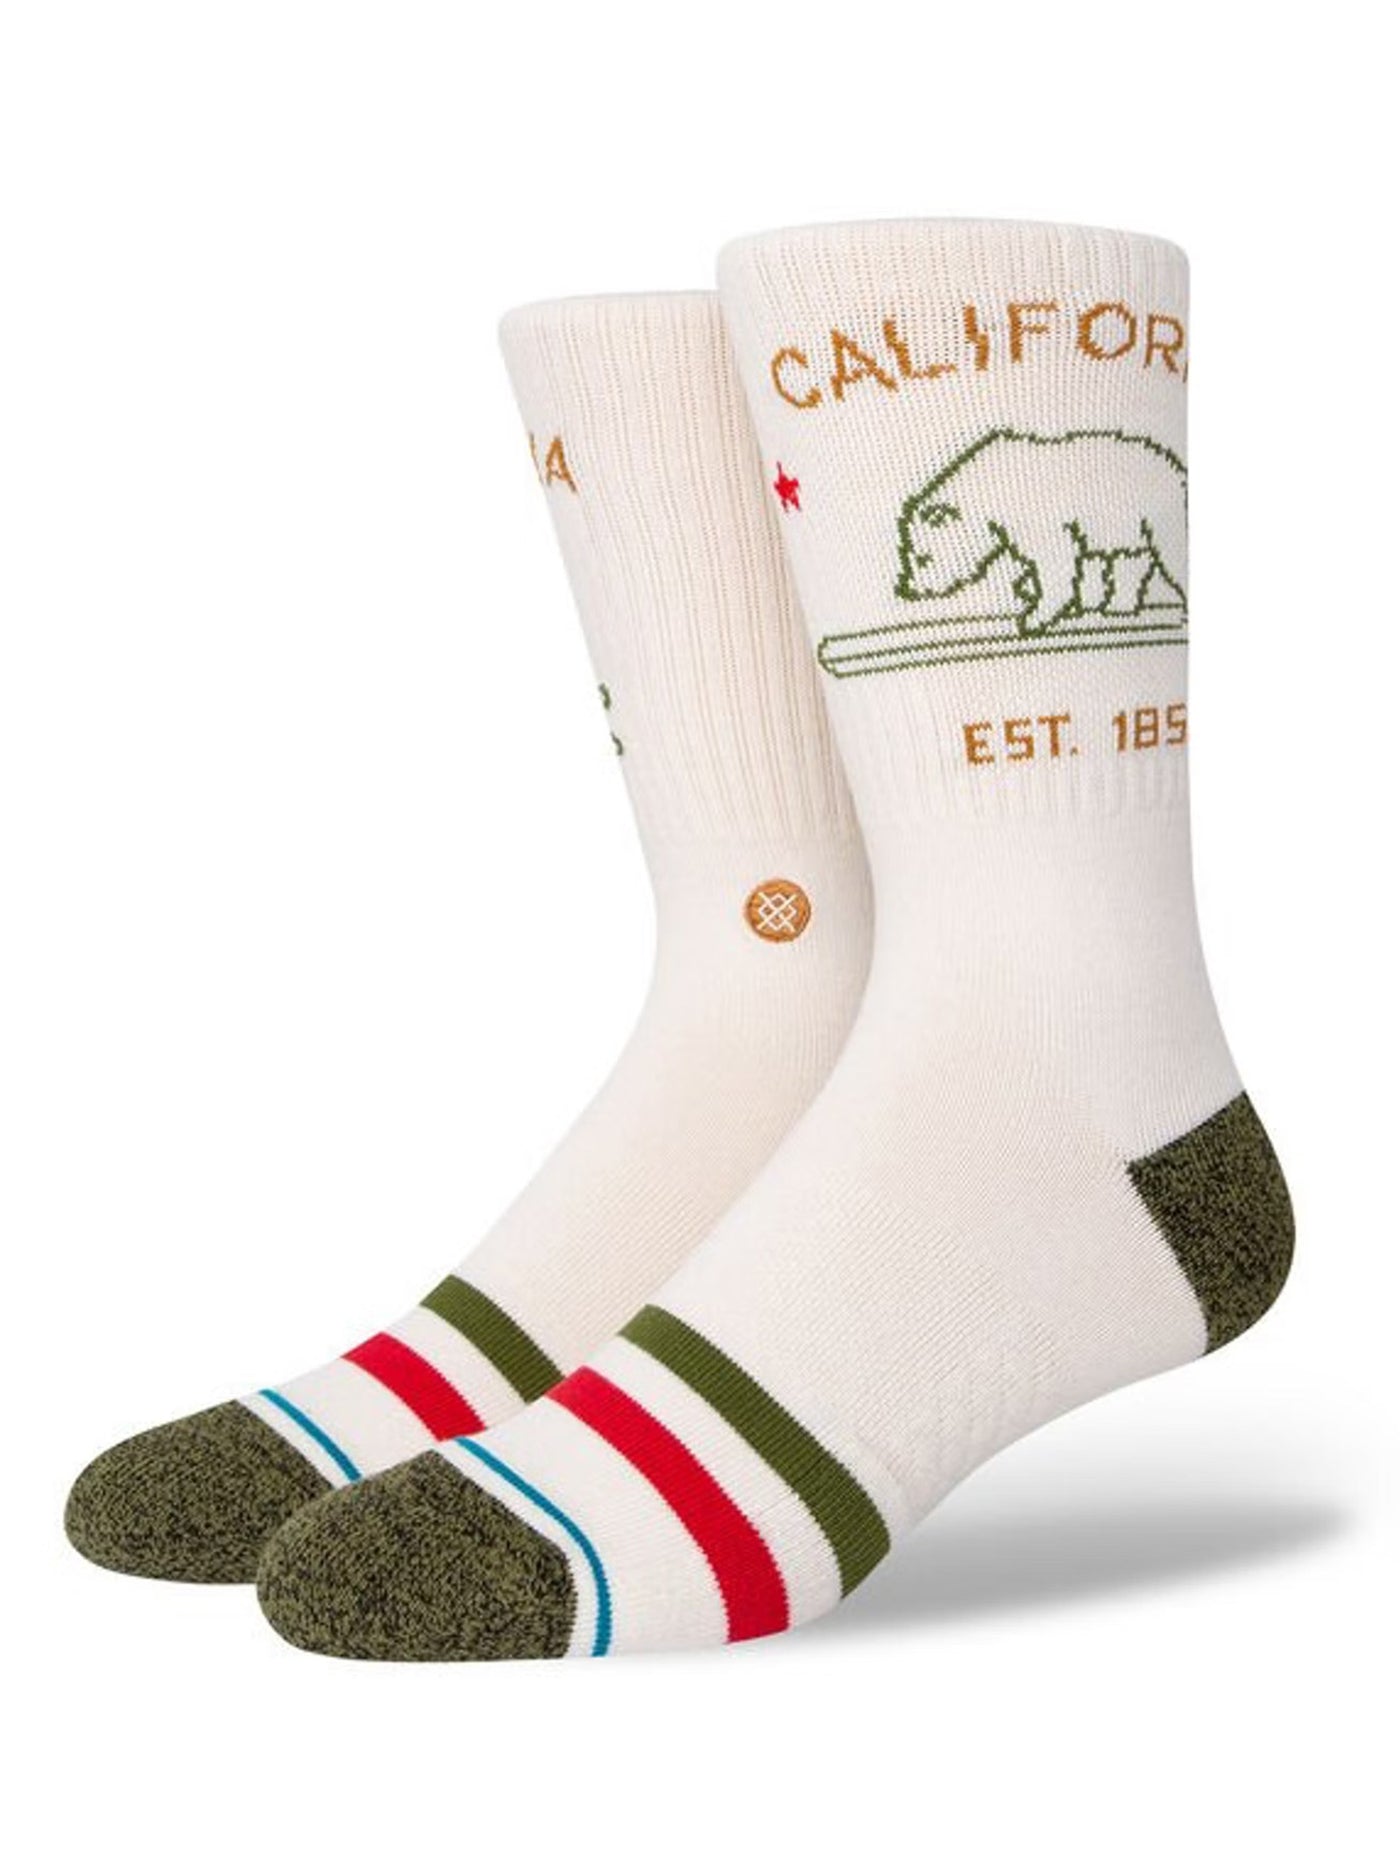 Stance California Republic 2 Crew Socks